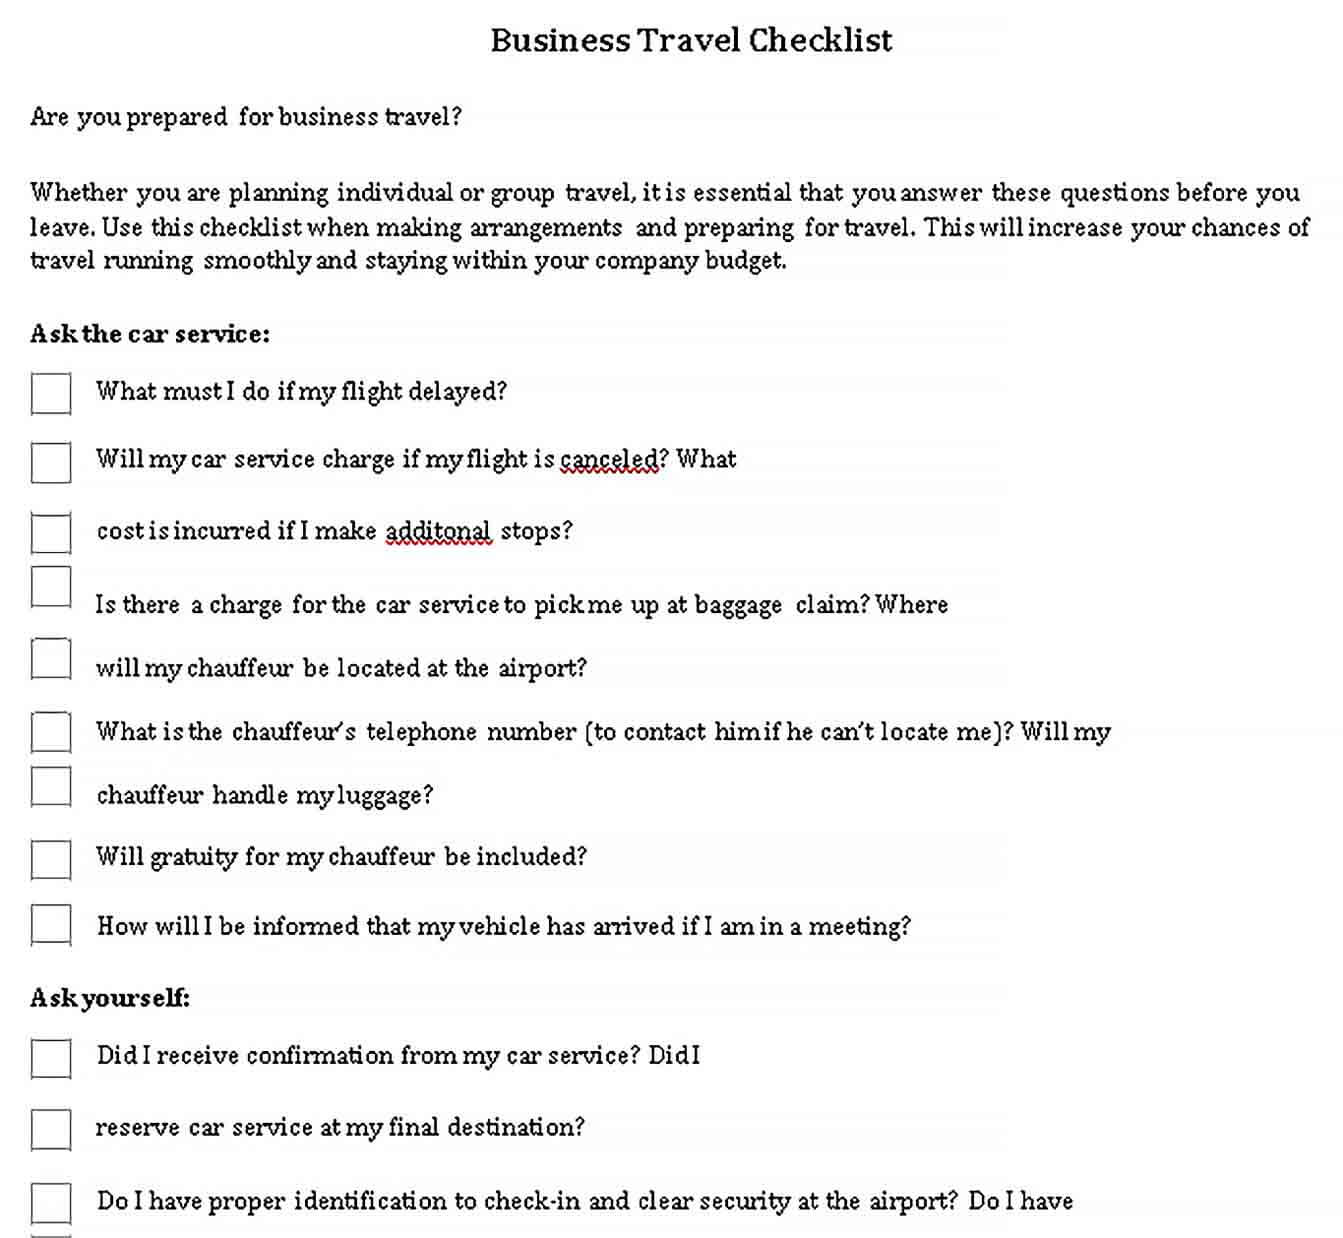 Sample Business Travel Checklist